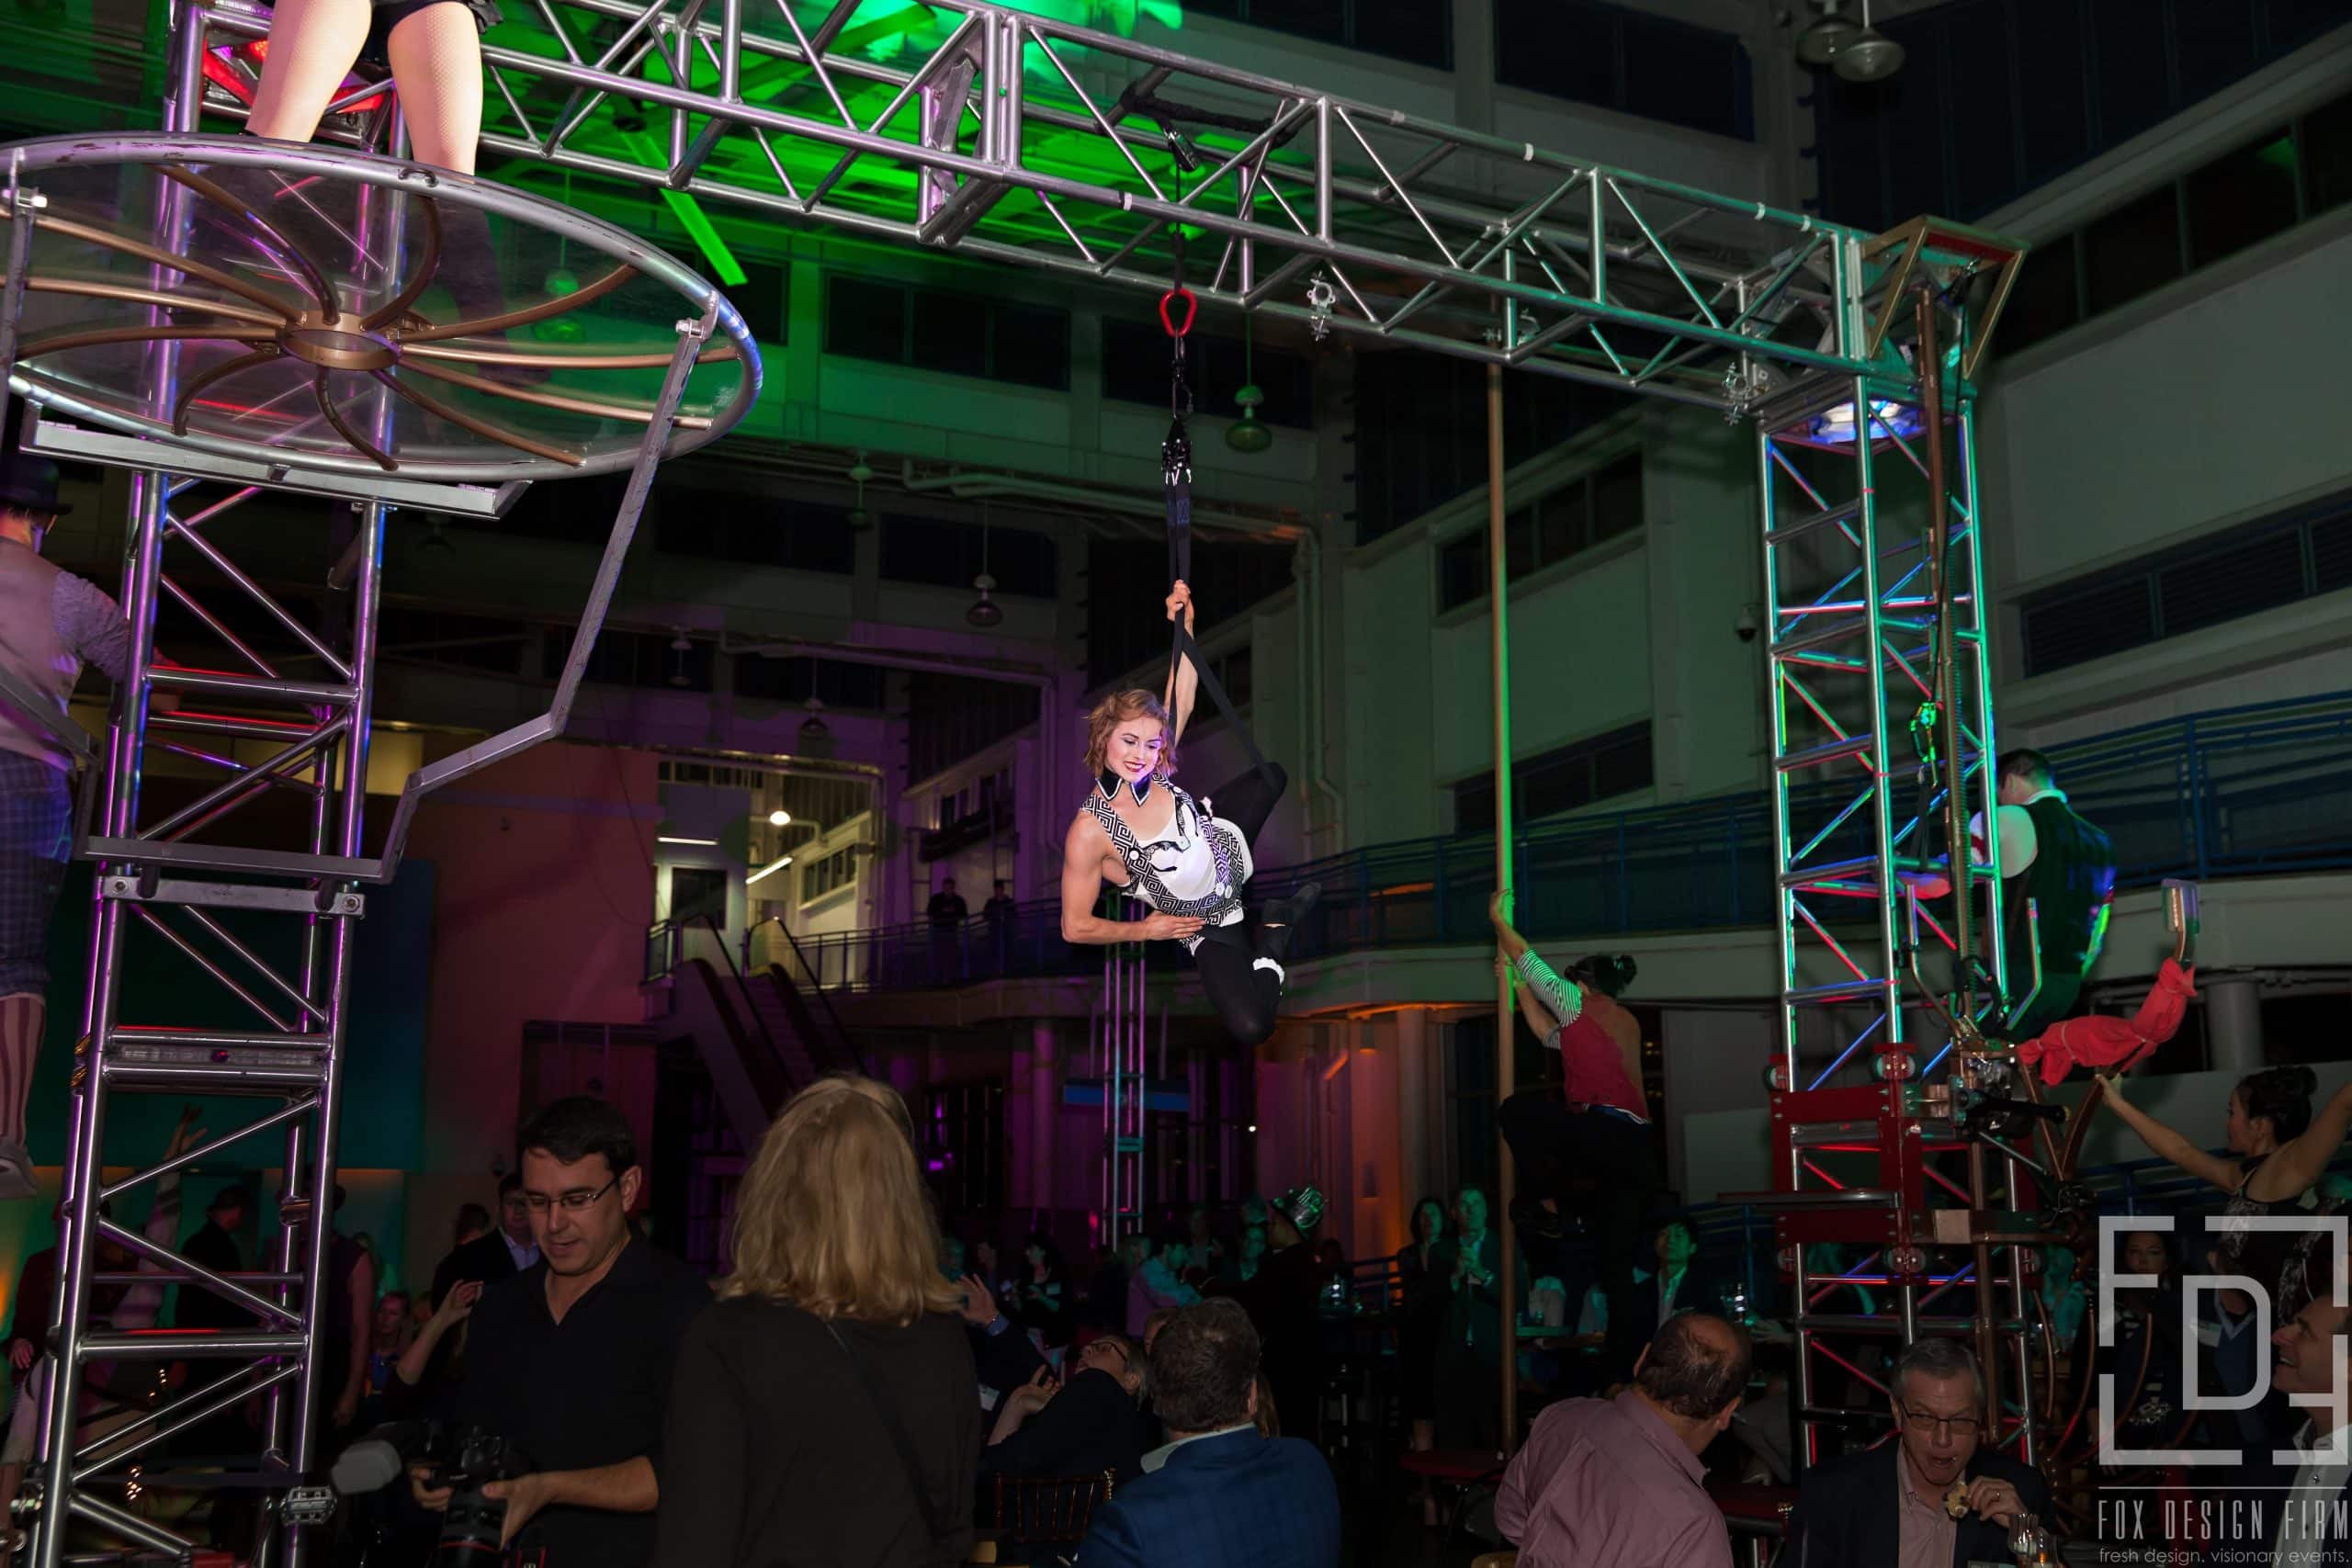 San Diego event photographer Broadway Pier Embarcadero Steampunk Theme Circus Artists